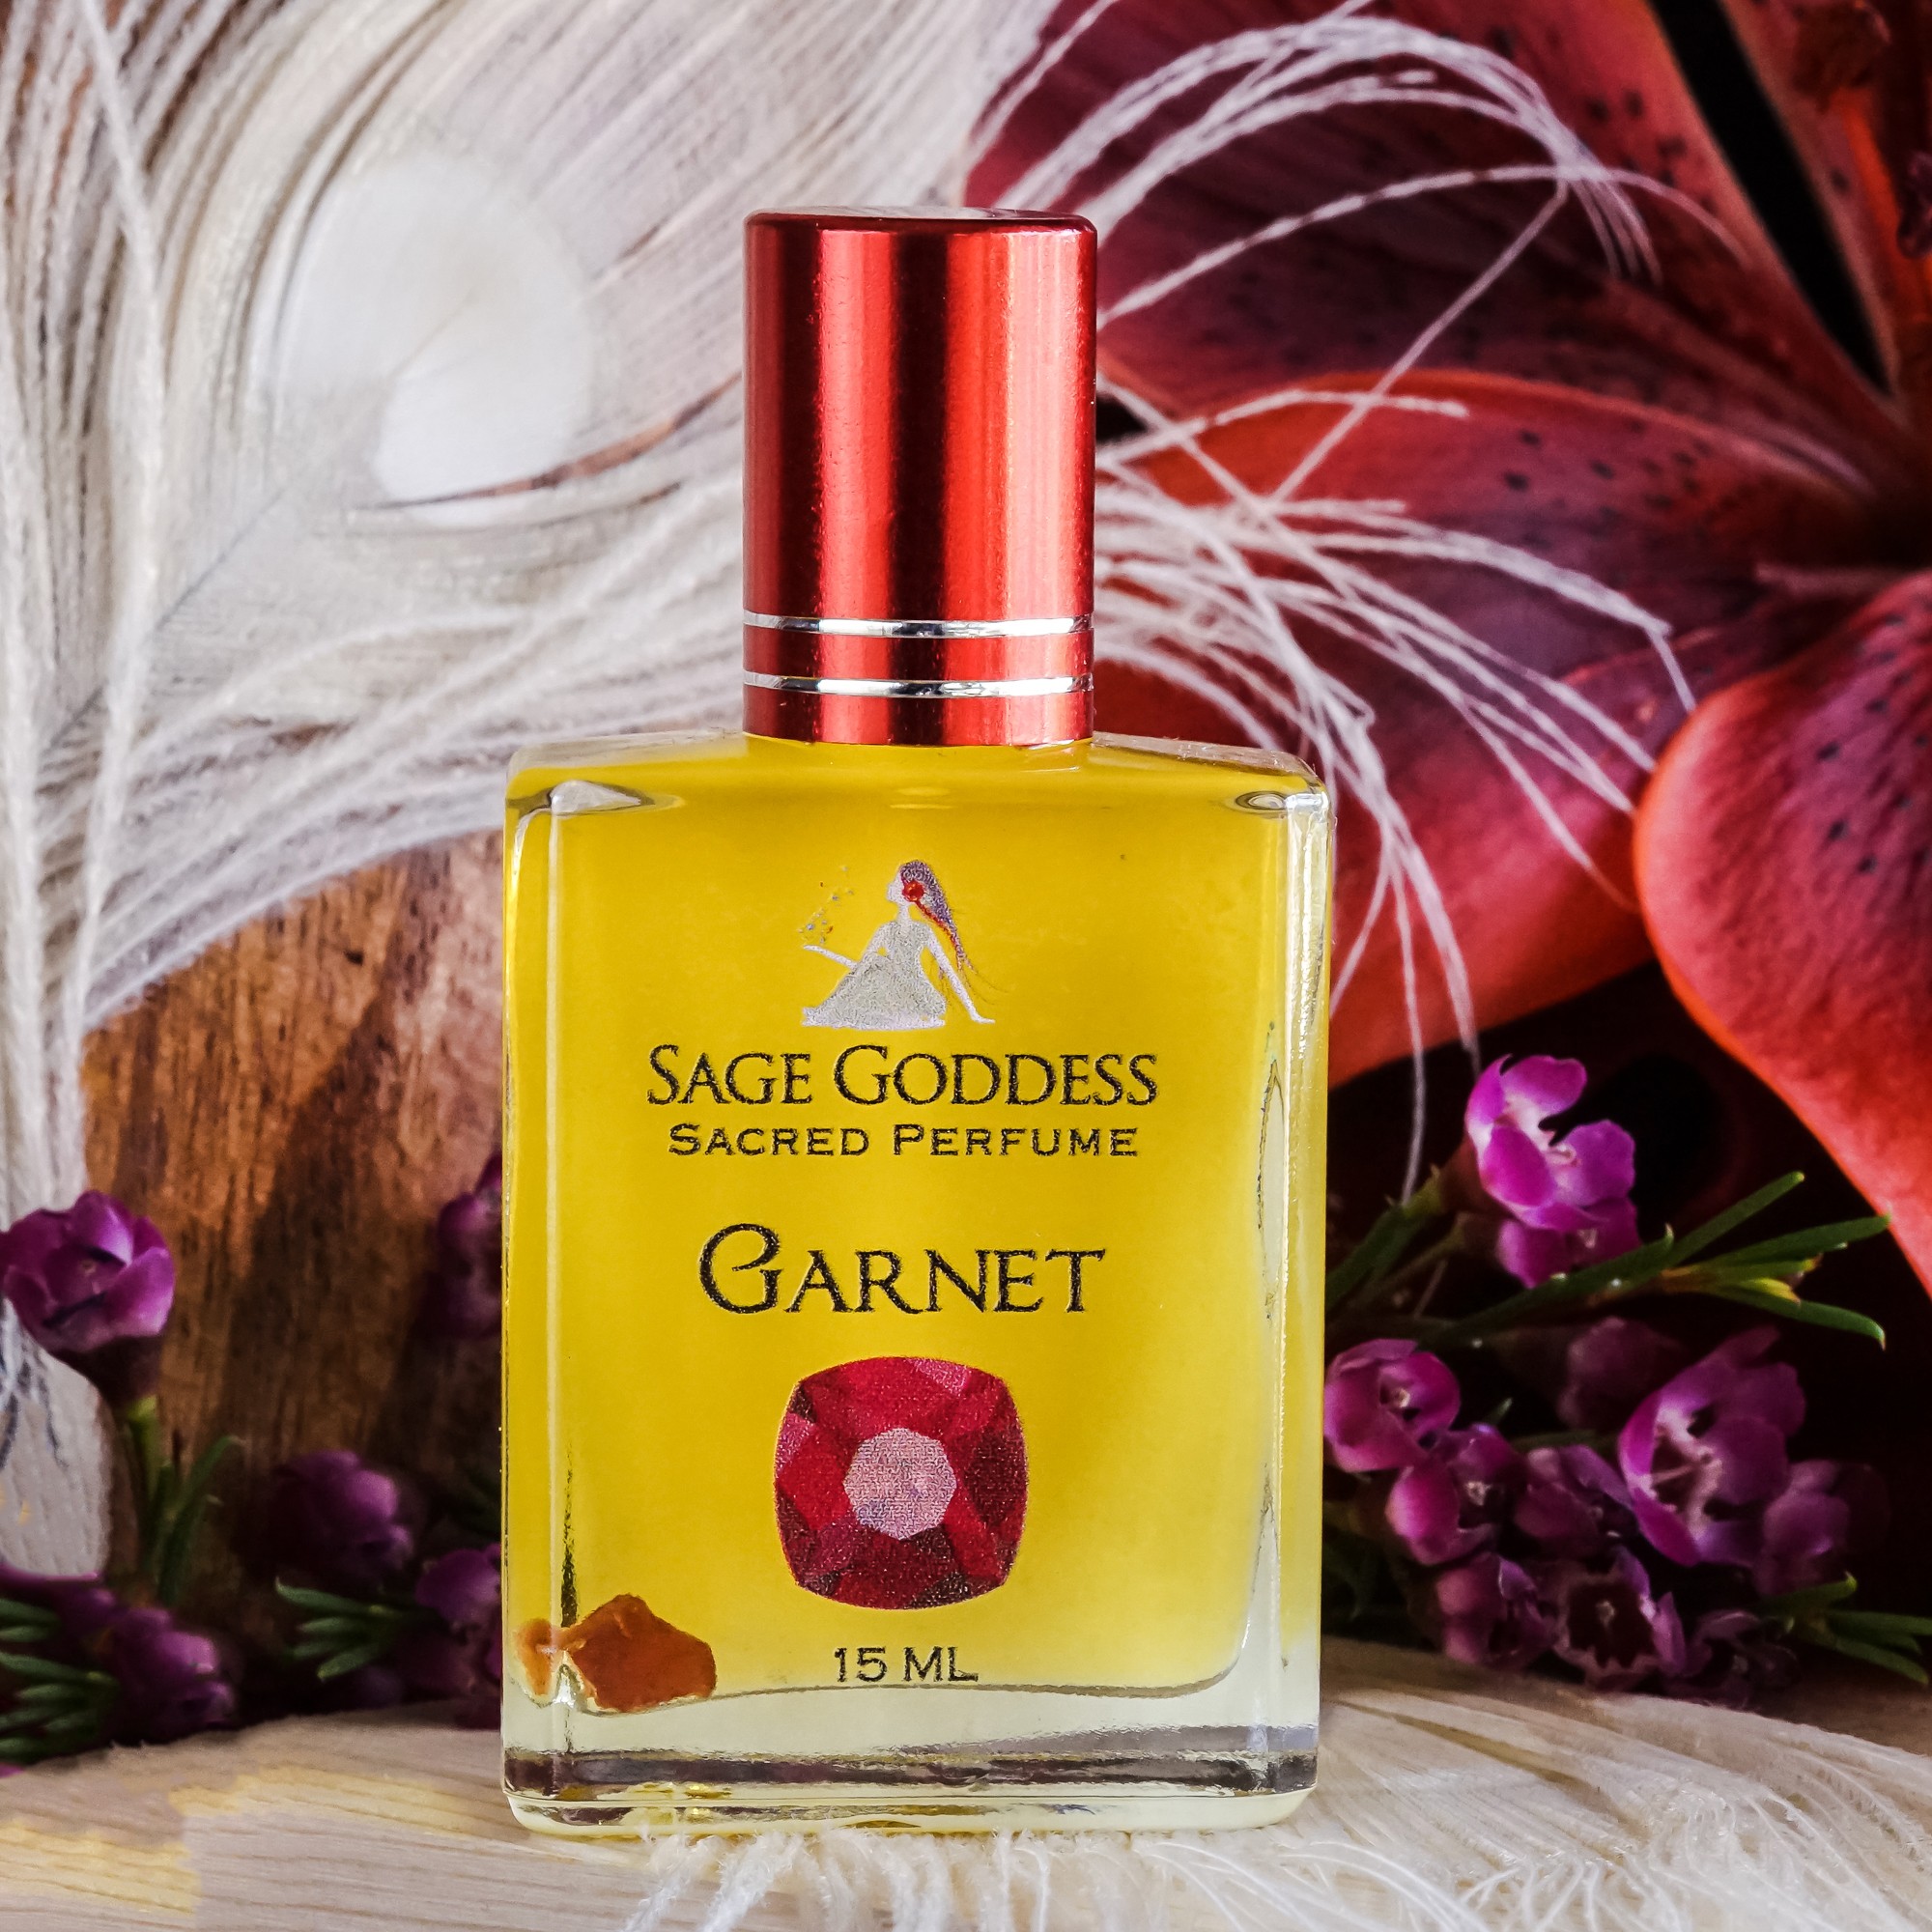 garnet perfume